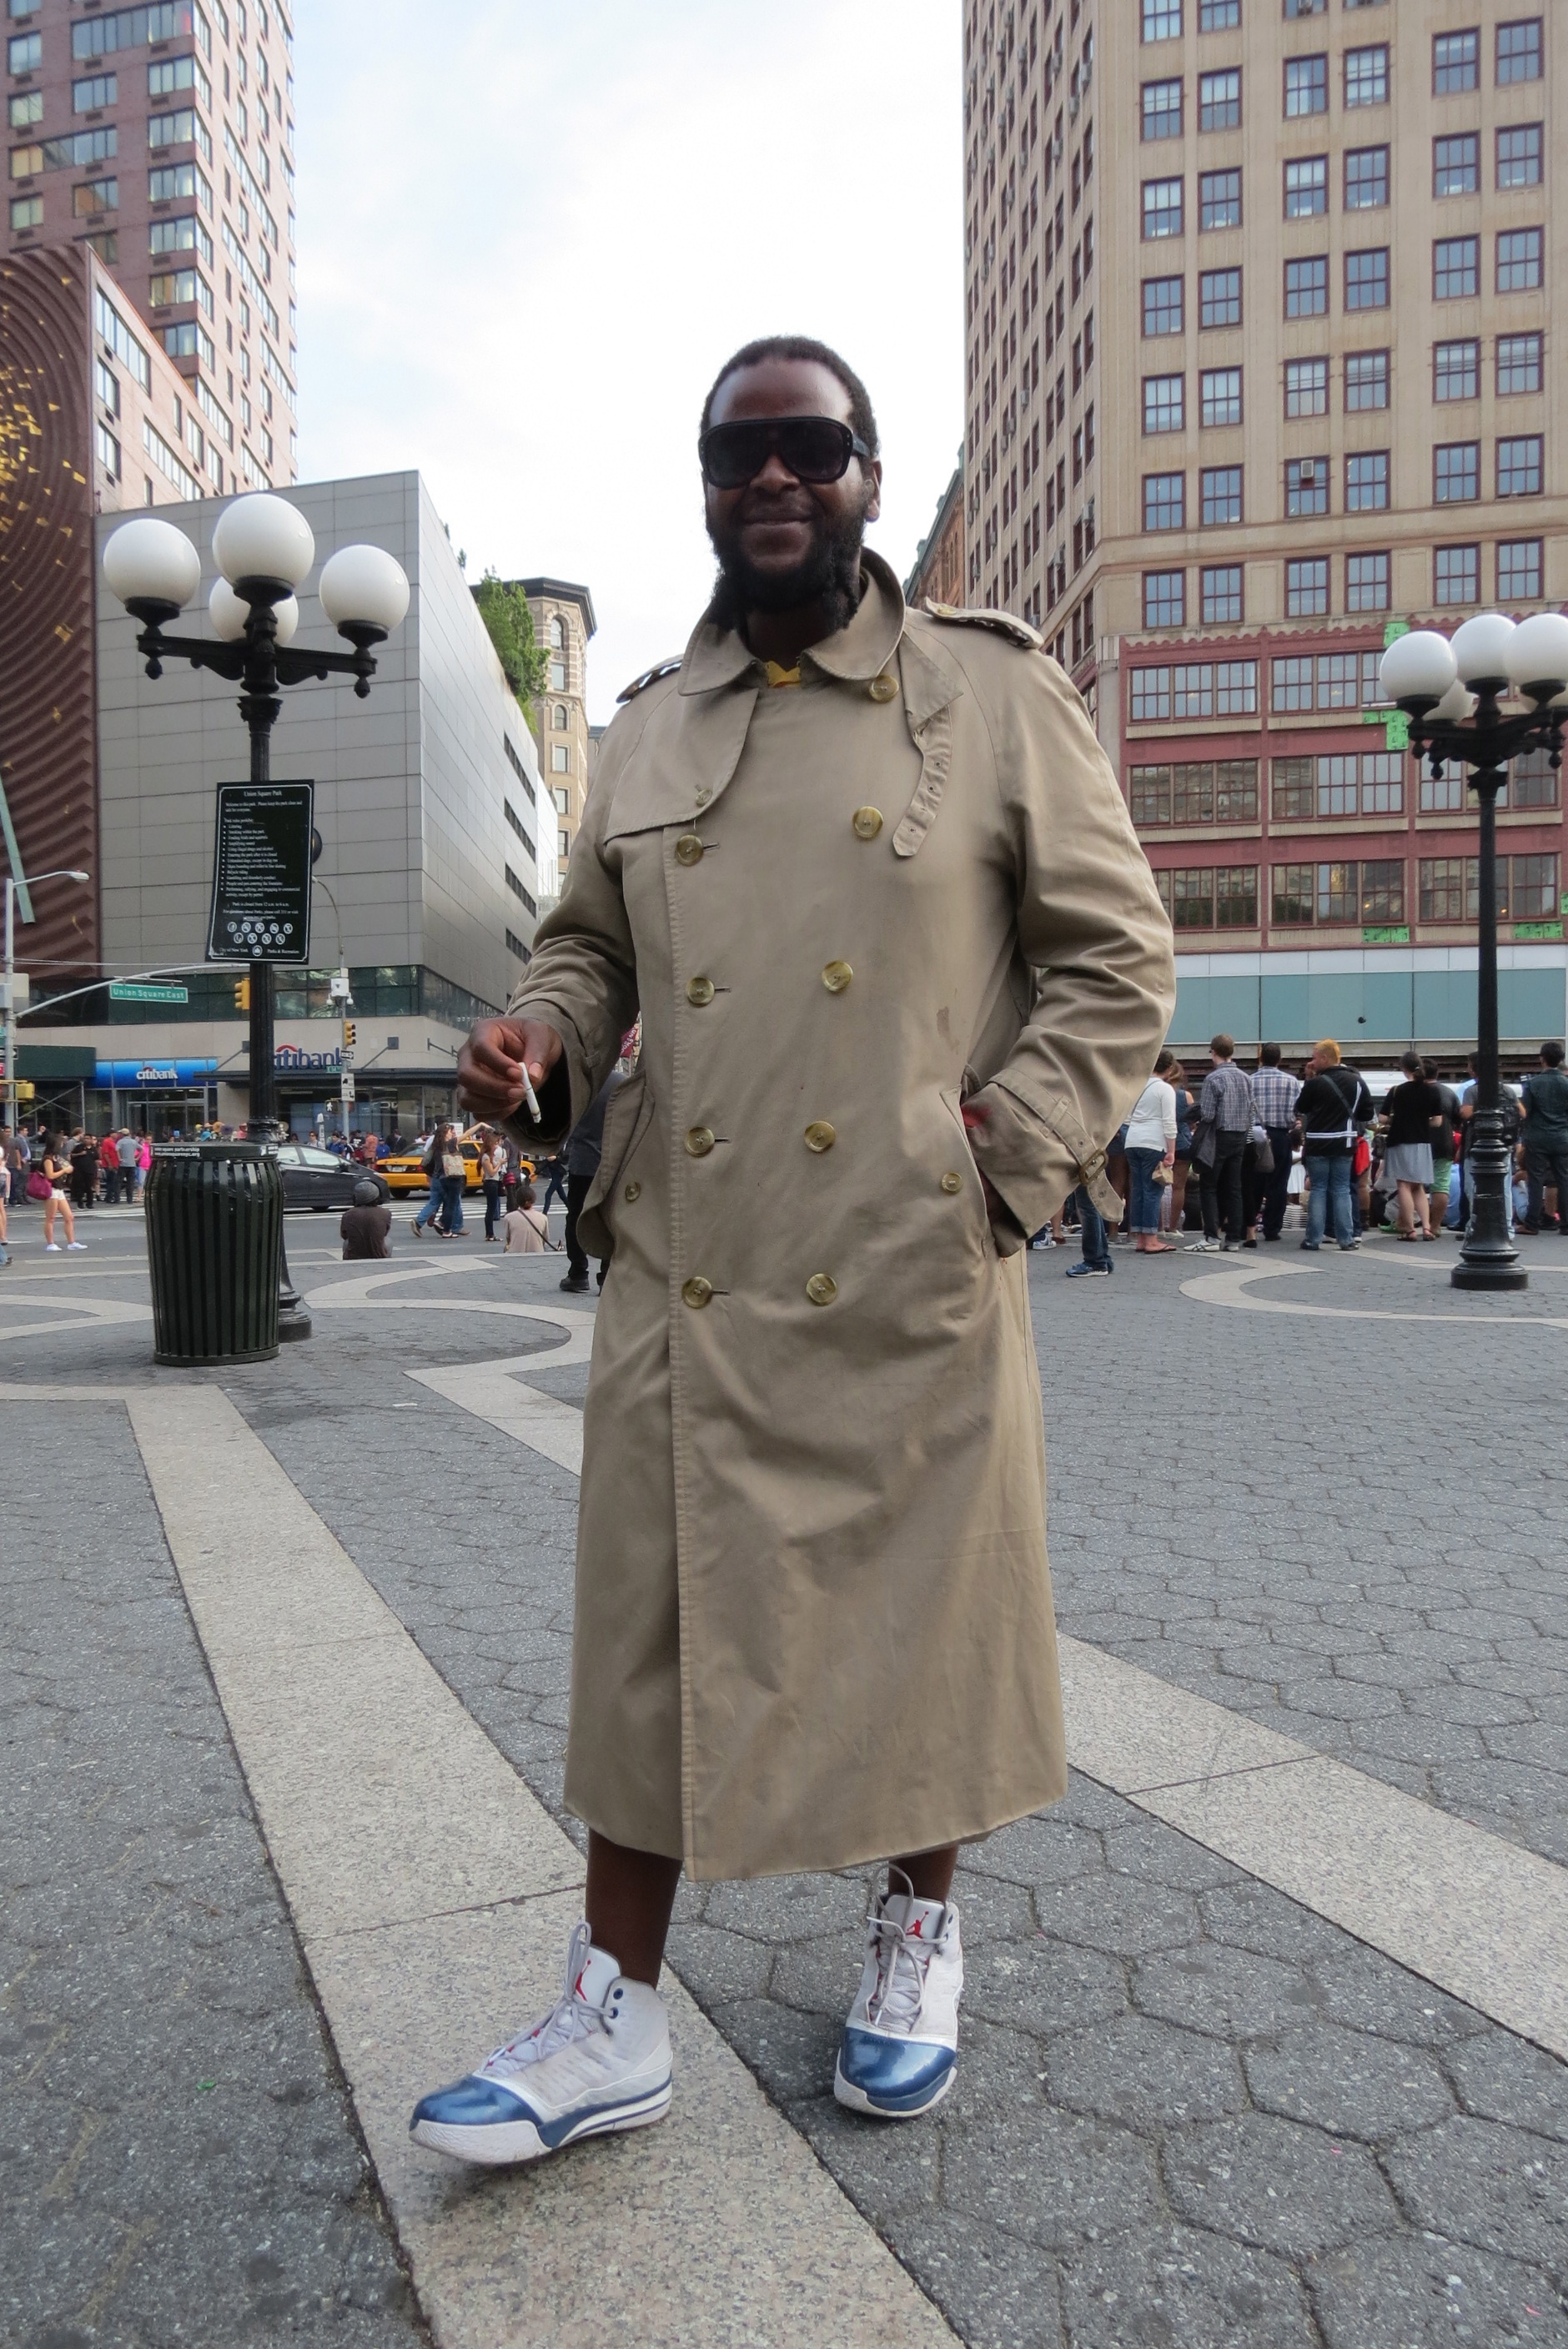 Man poses in overcoat